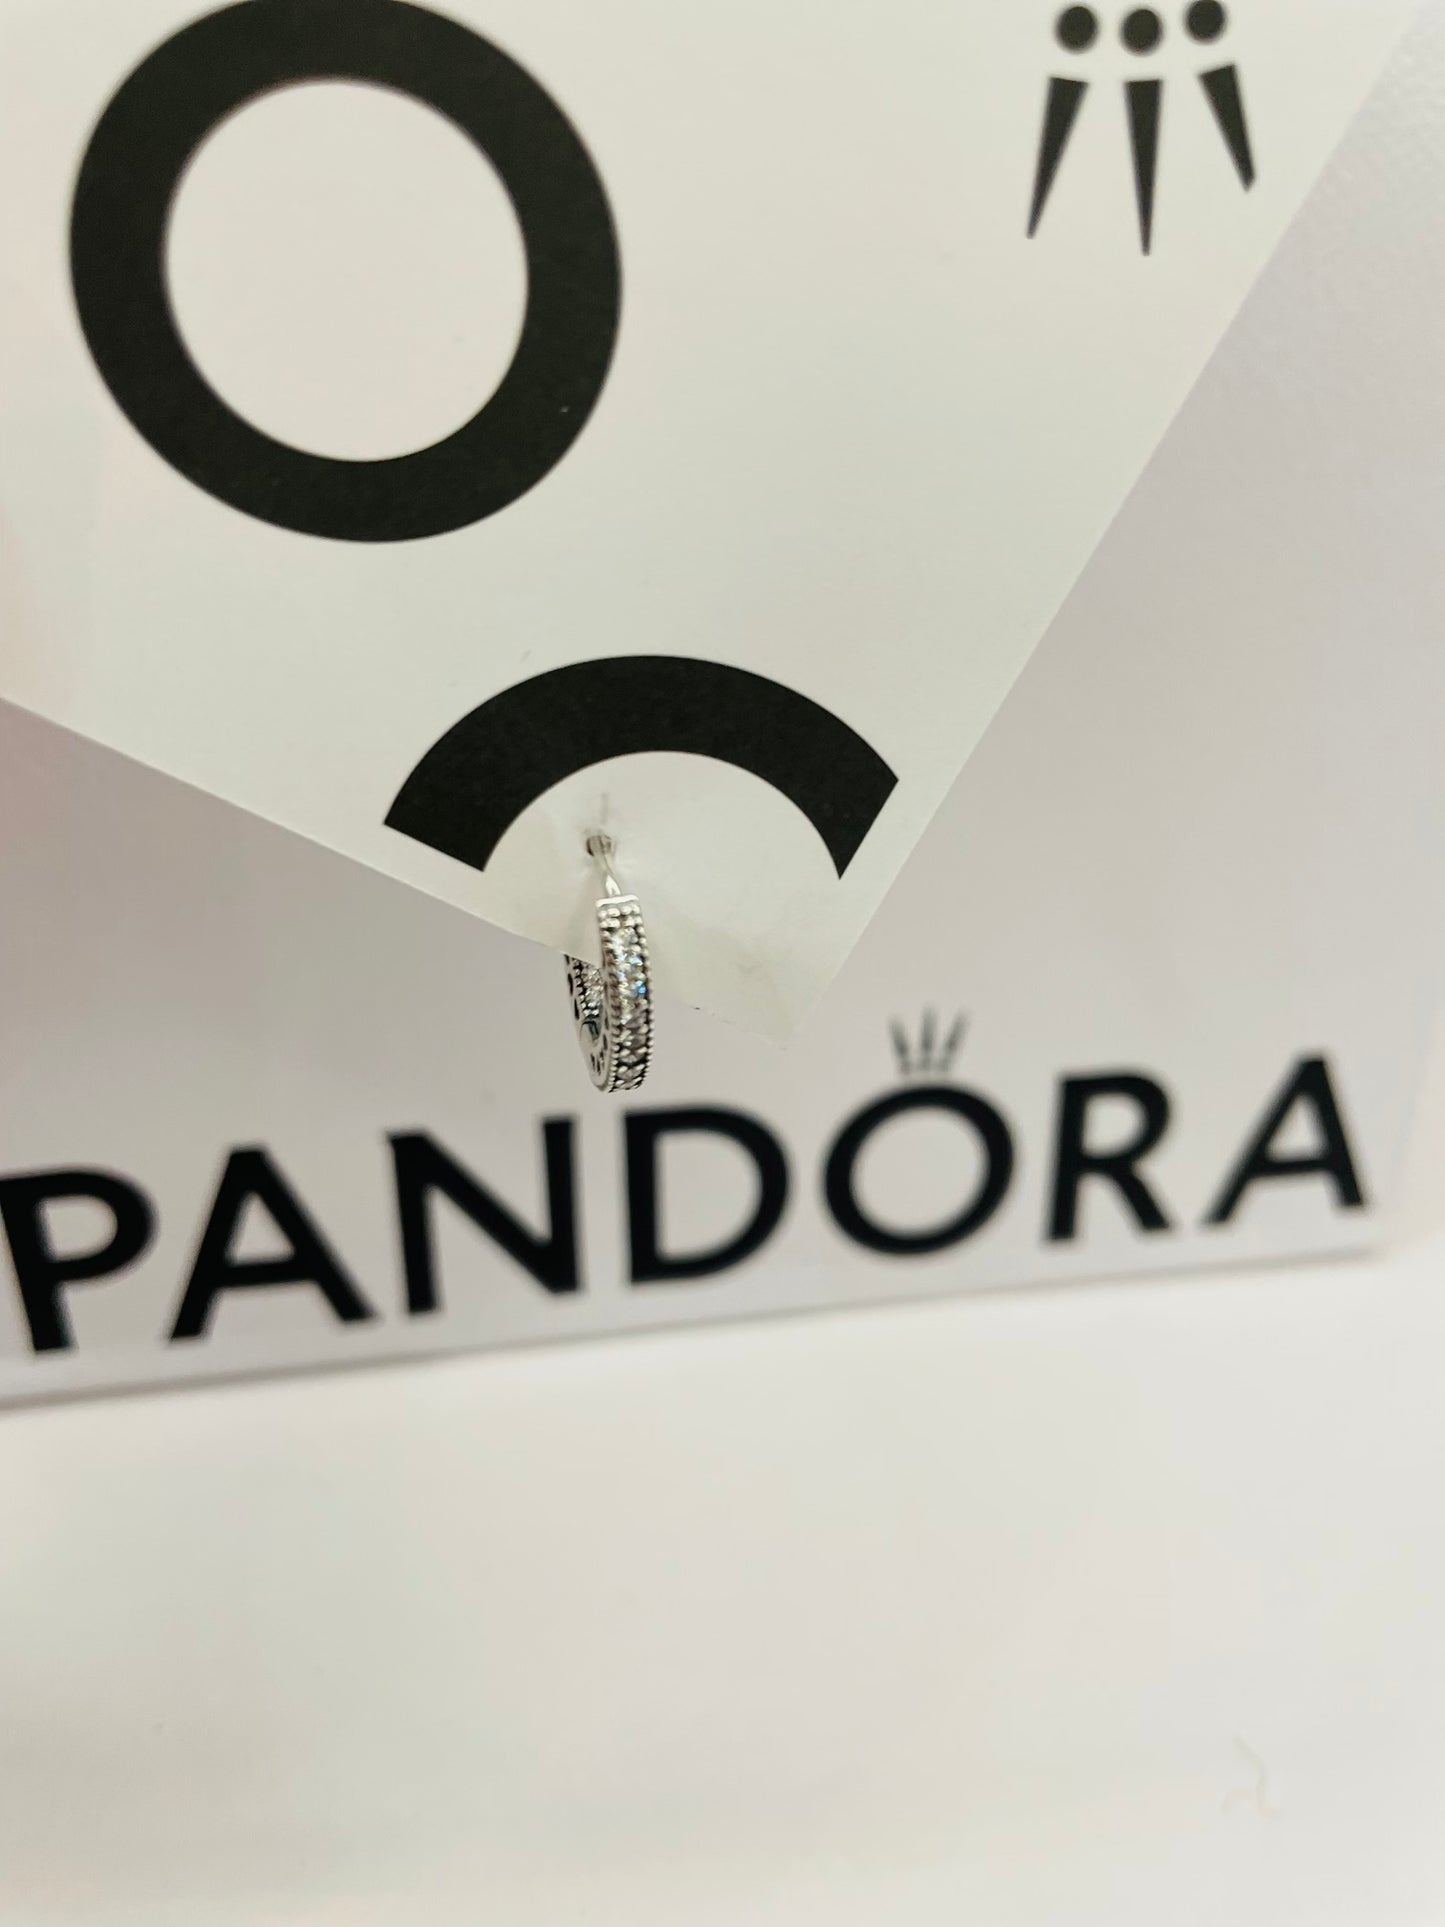 Pandora earring